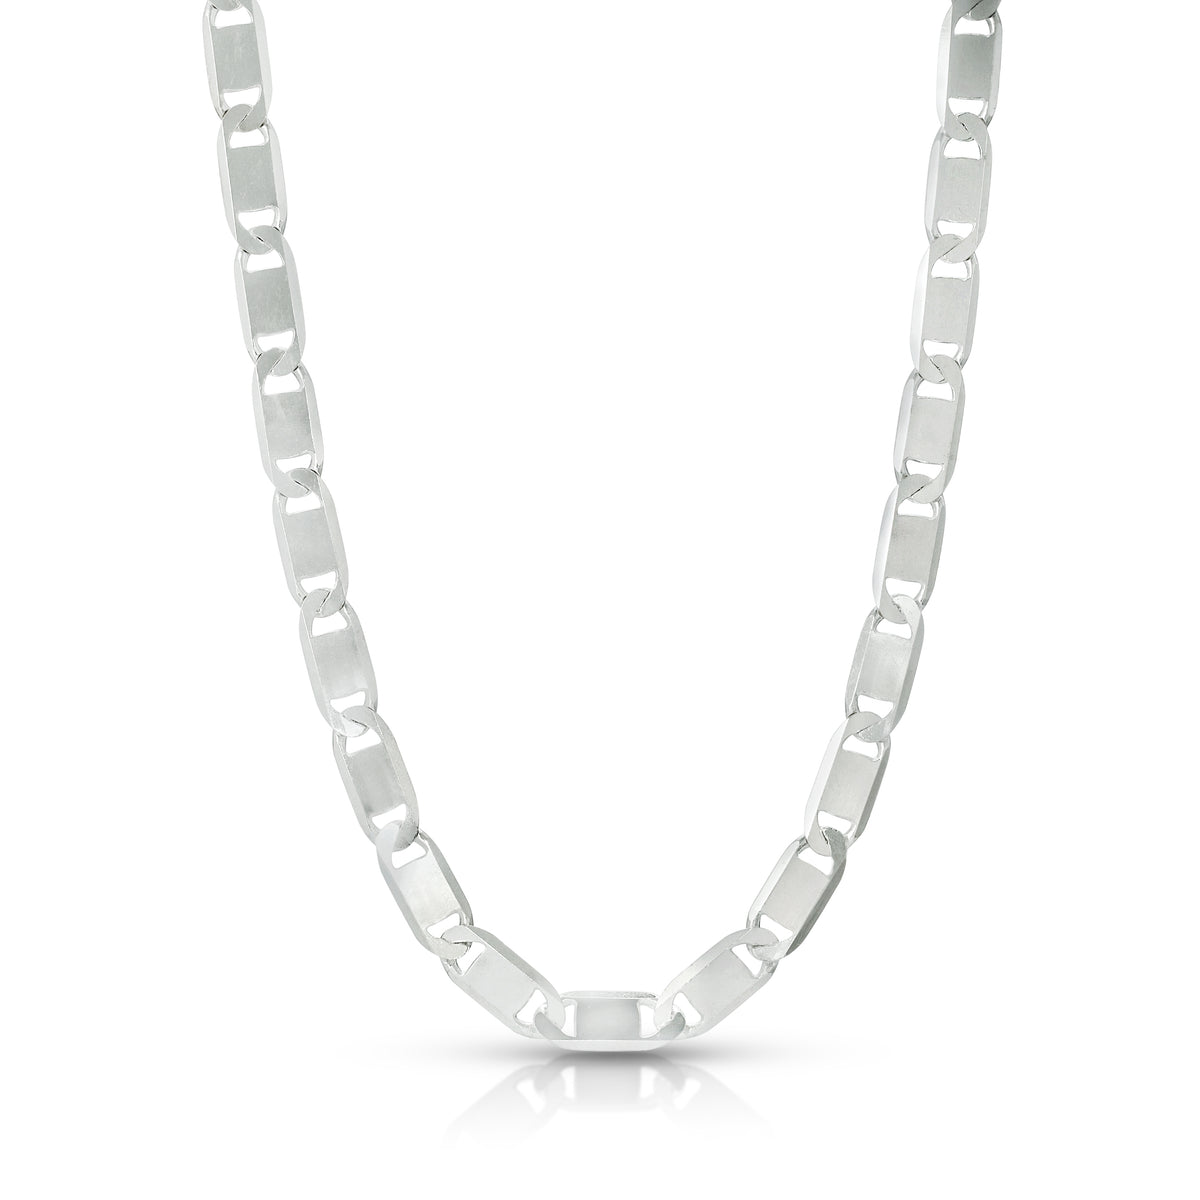 7mm Rope Chain Sterling Silver Diamond Cut - Luke Zion Jewelry 26 Inches